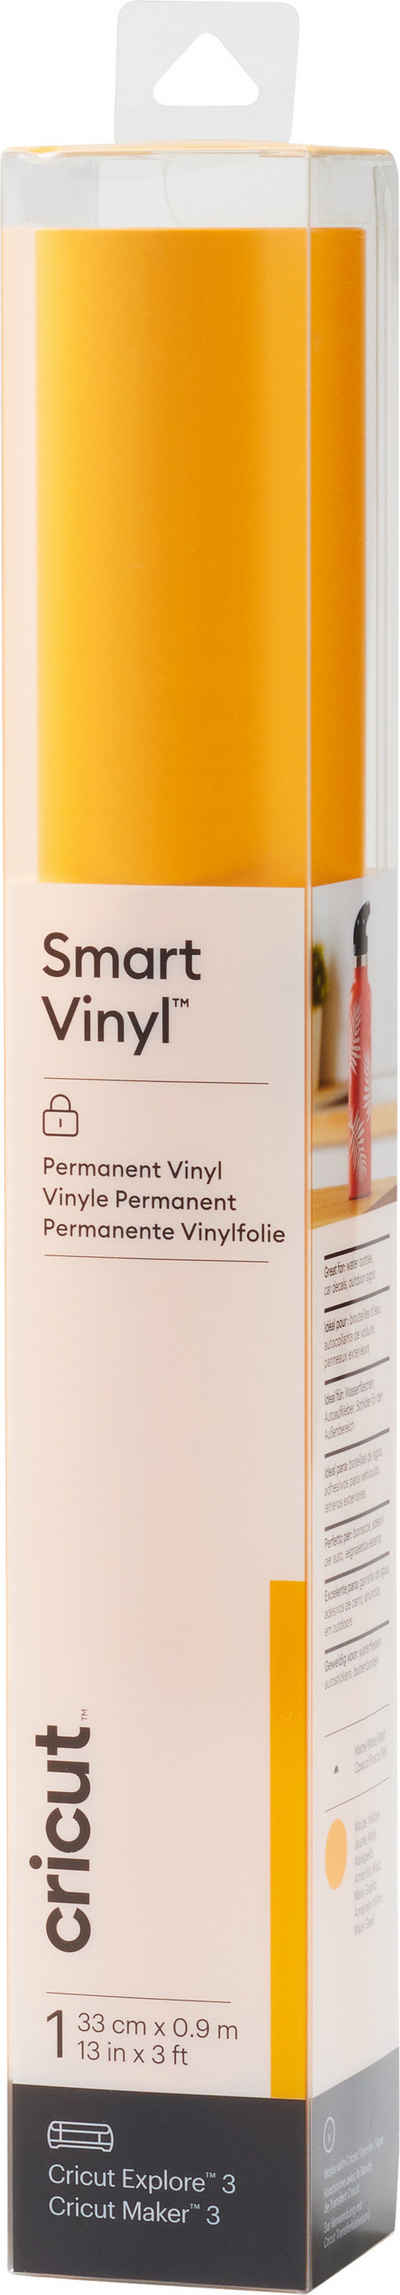 Cricut Dekorationsfolie Vinylfolie Smart Vinyl Permanent, selbstklebend 90 cm x 33 cm